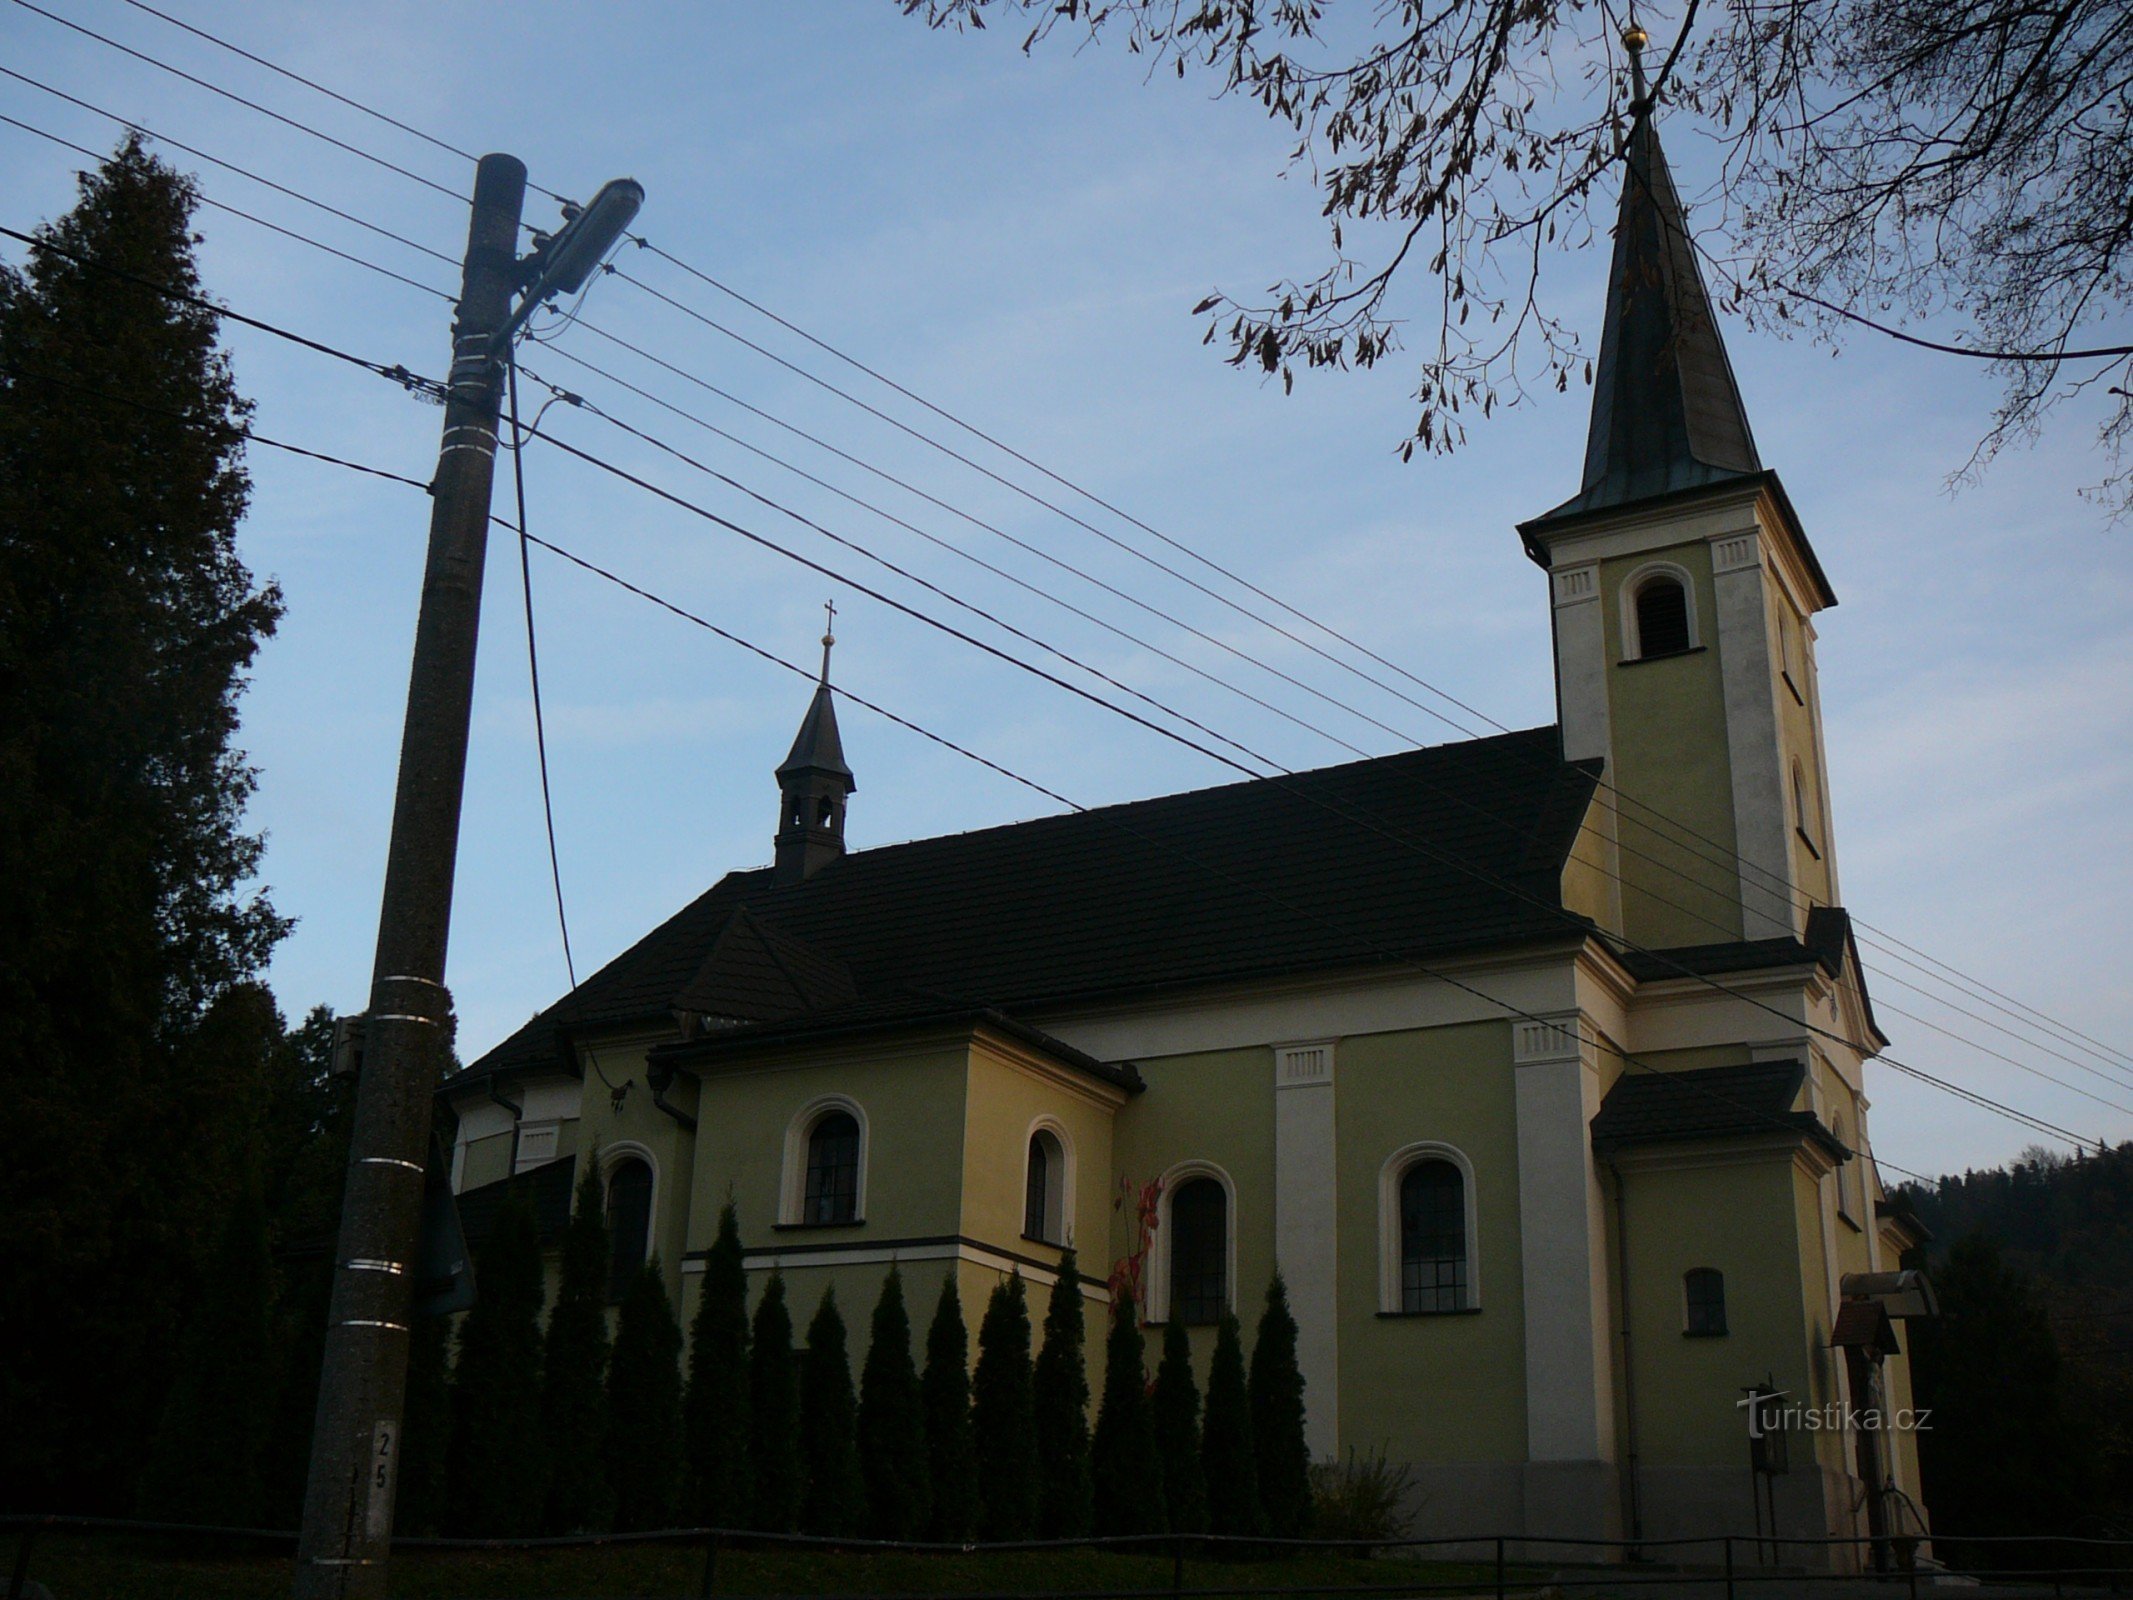 St. Cyrillus en Methodius in Chlebovice